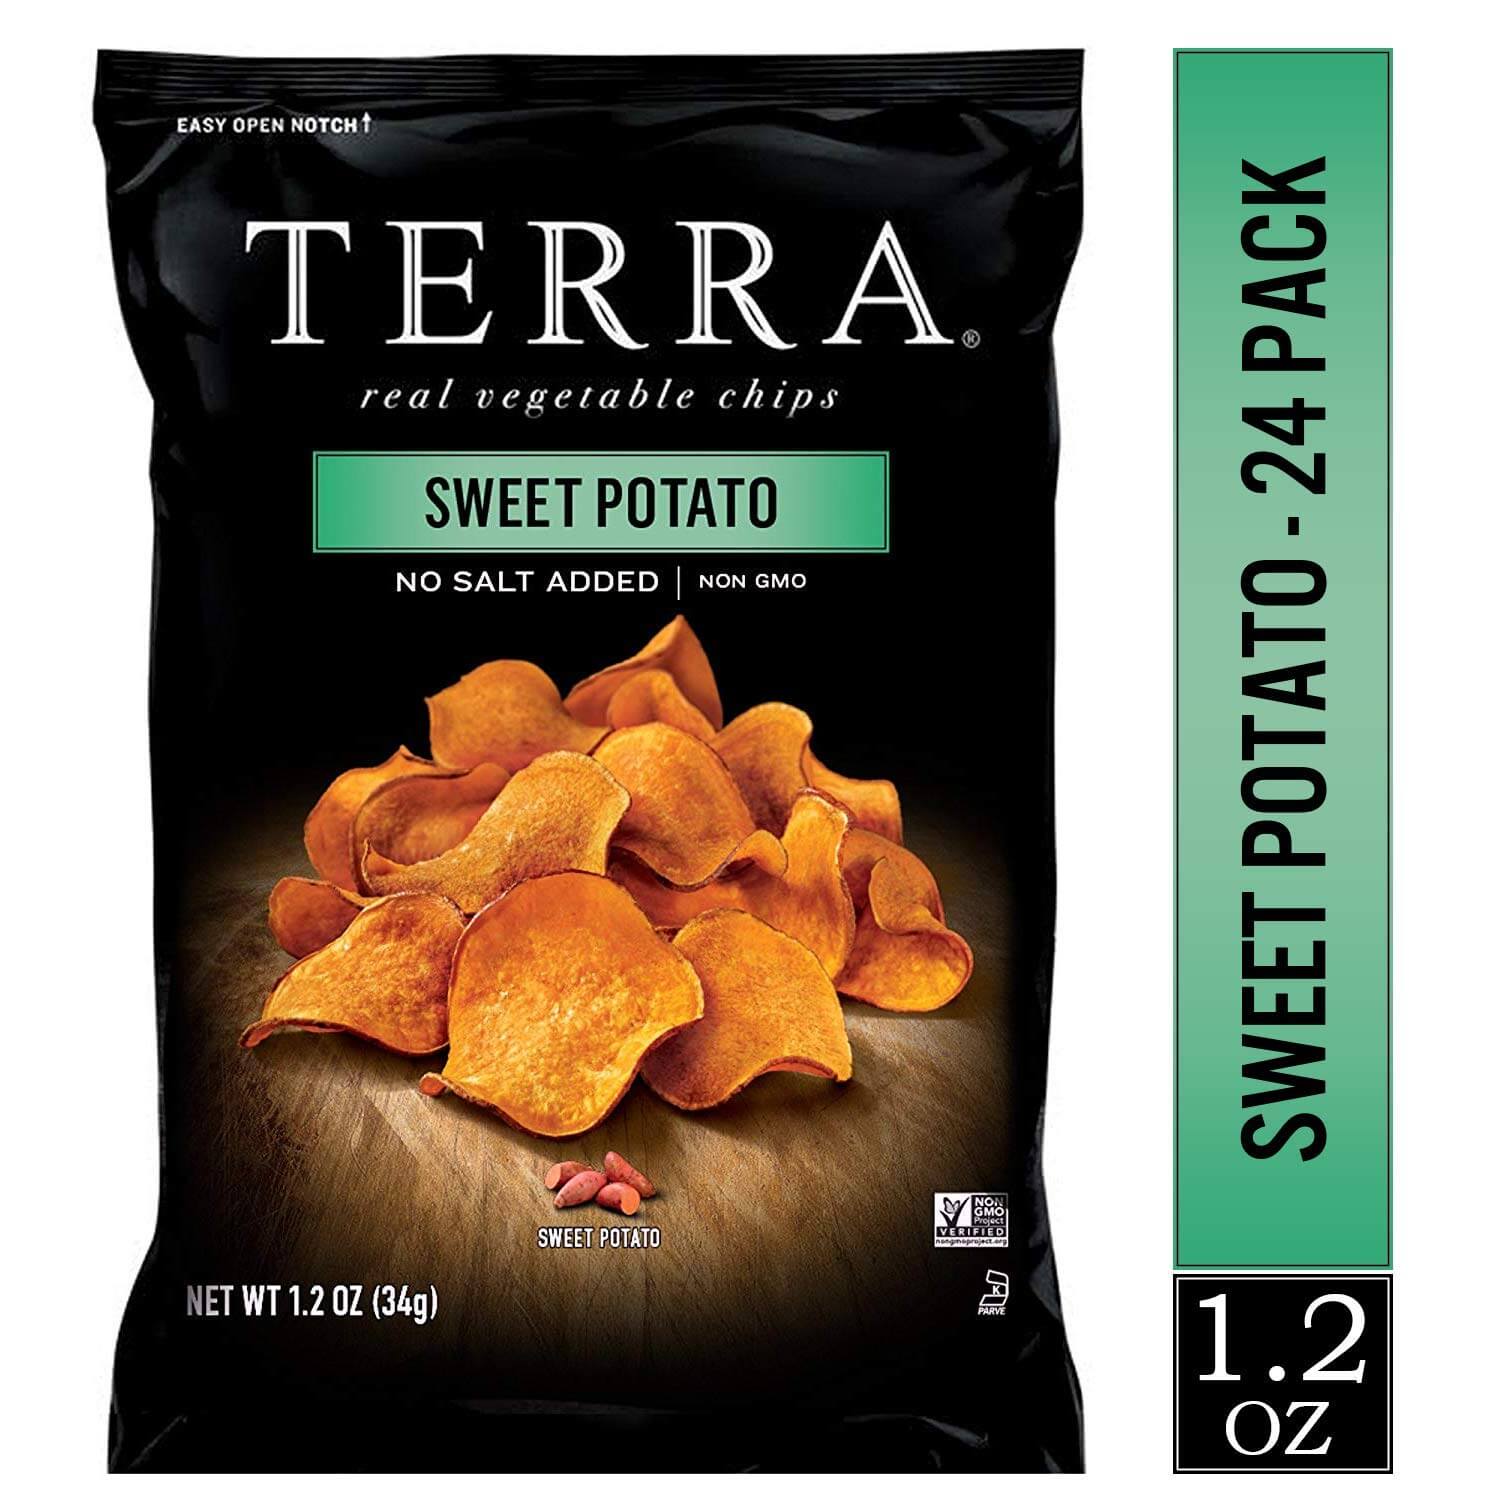 TERRA Sweet Potato Chips